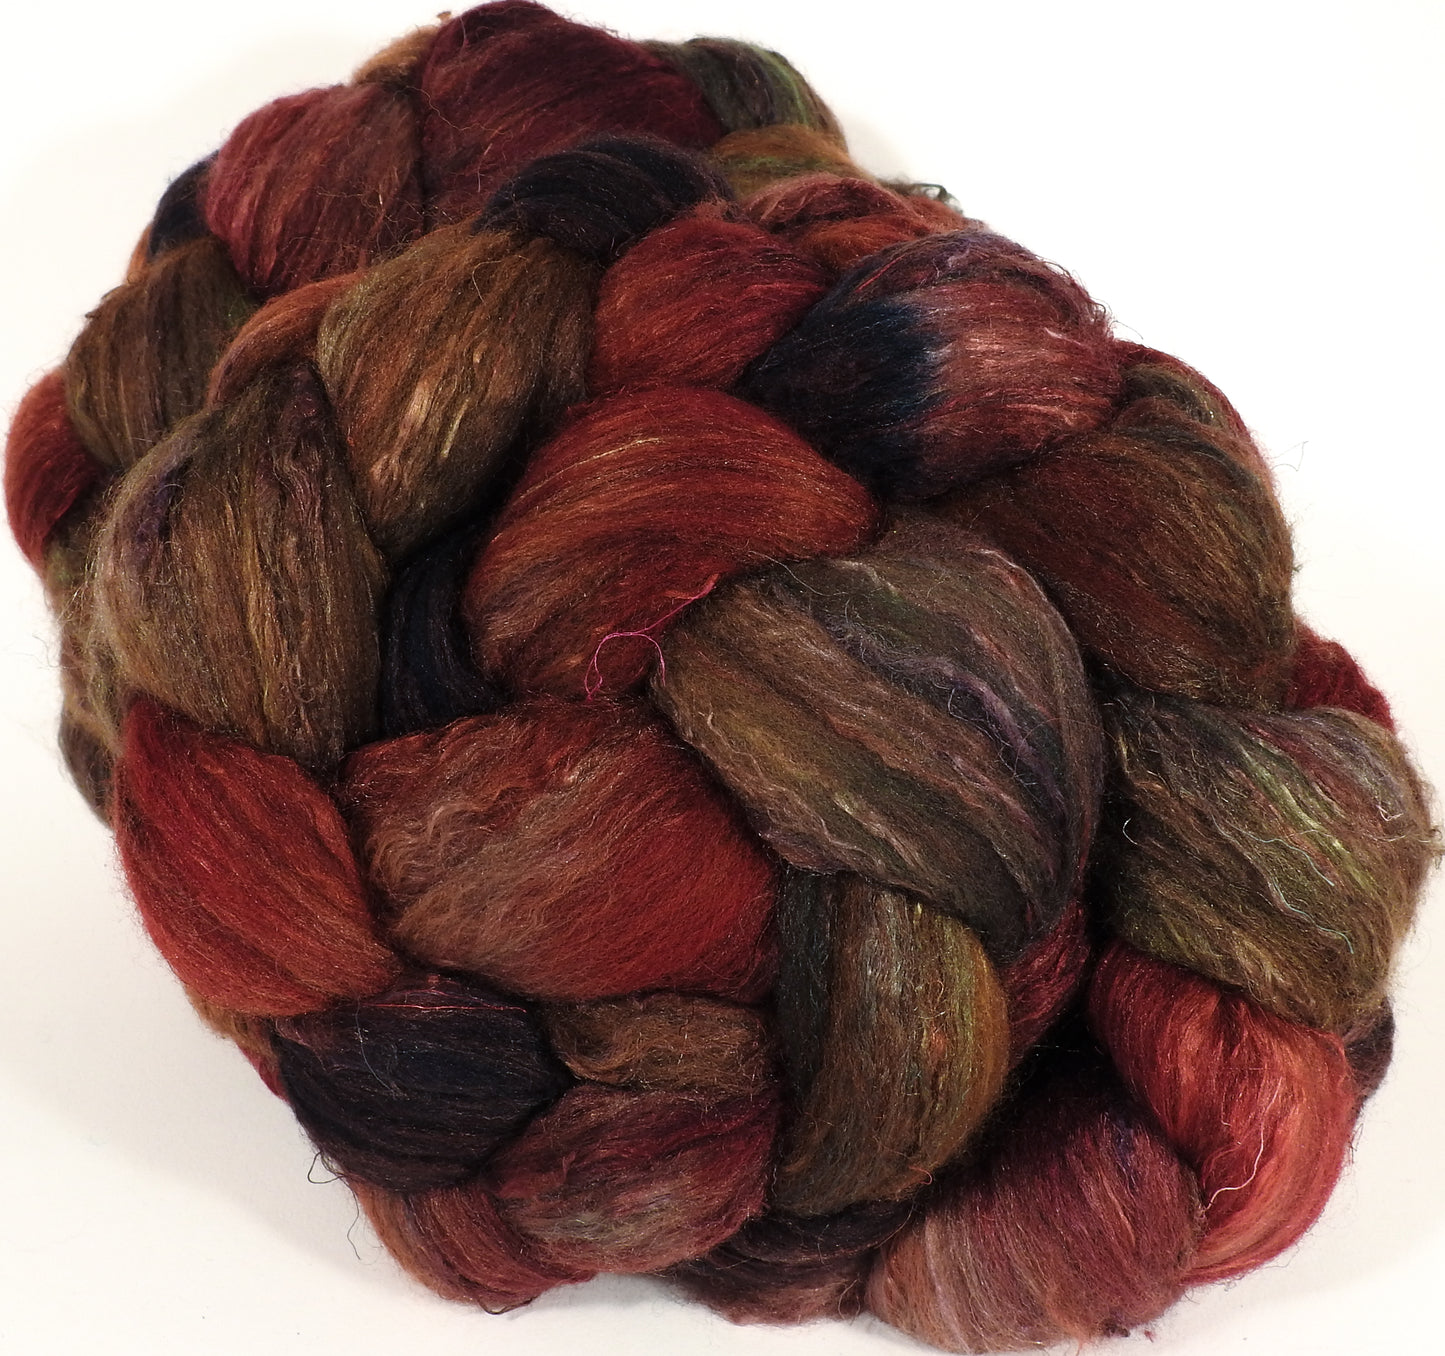 Batt in a Braid #39-SARI- 29 -(4.55 oz.)Falkland Merino/ Mulberry Silk / Sari Silk (50/25/25) - Inglenook Fibers